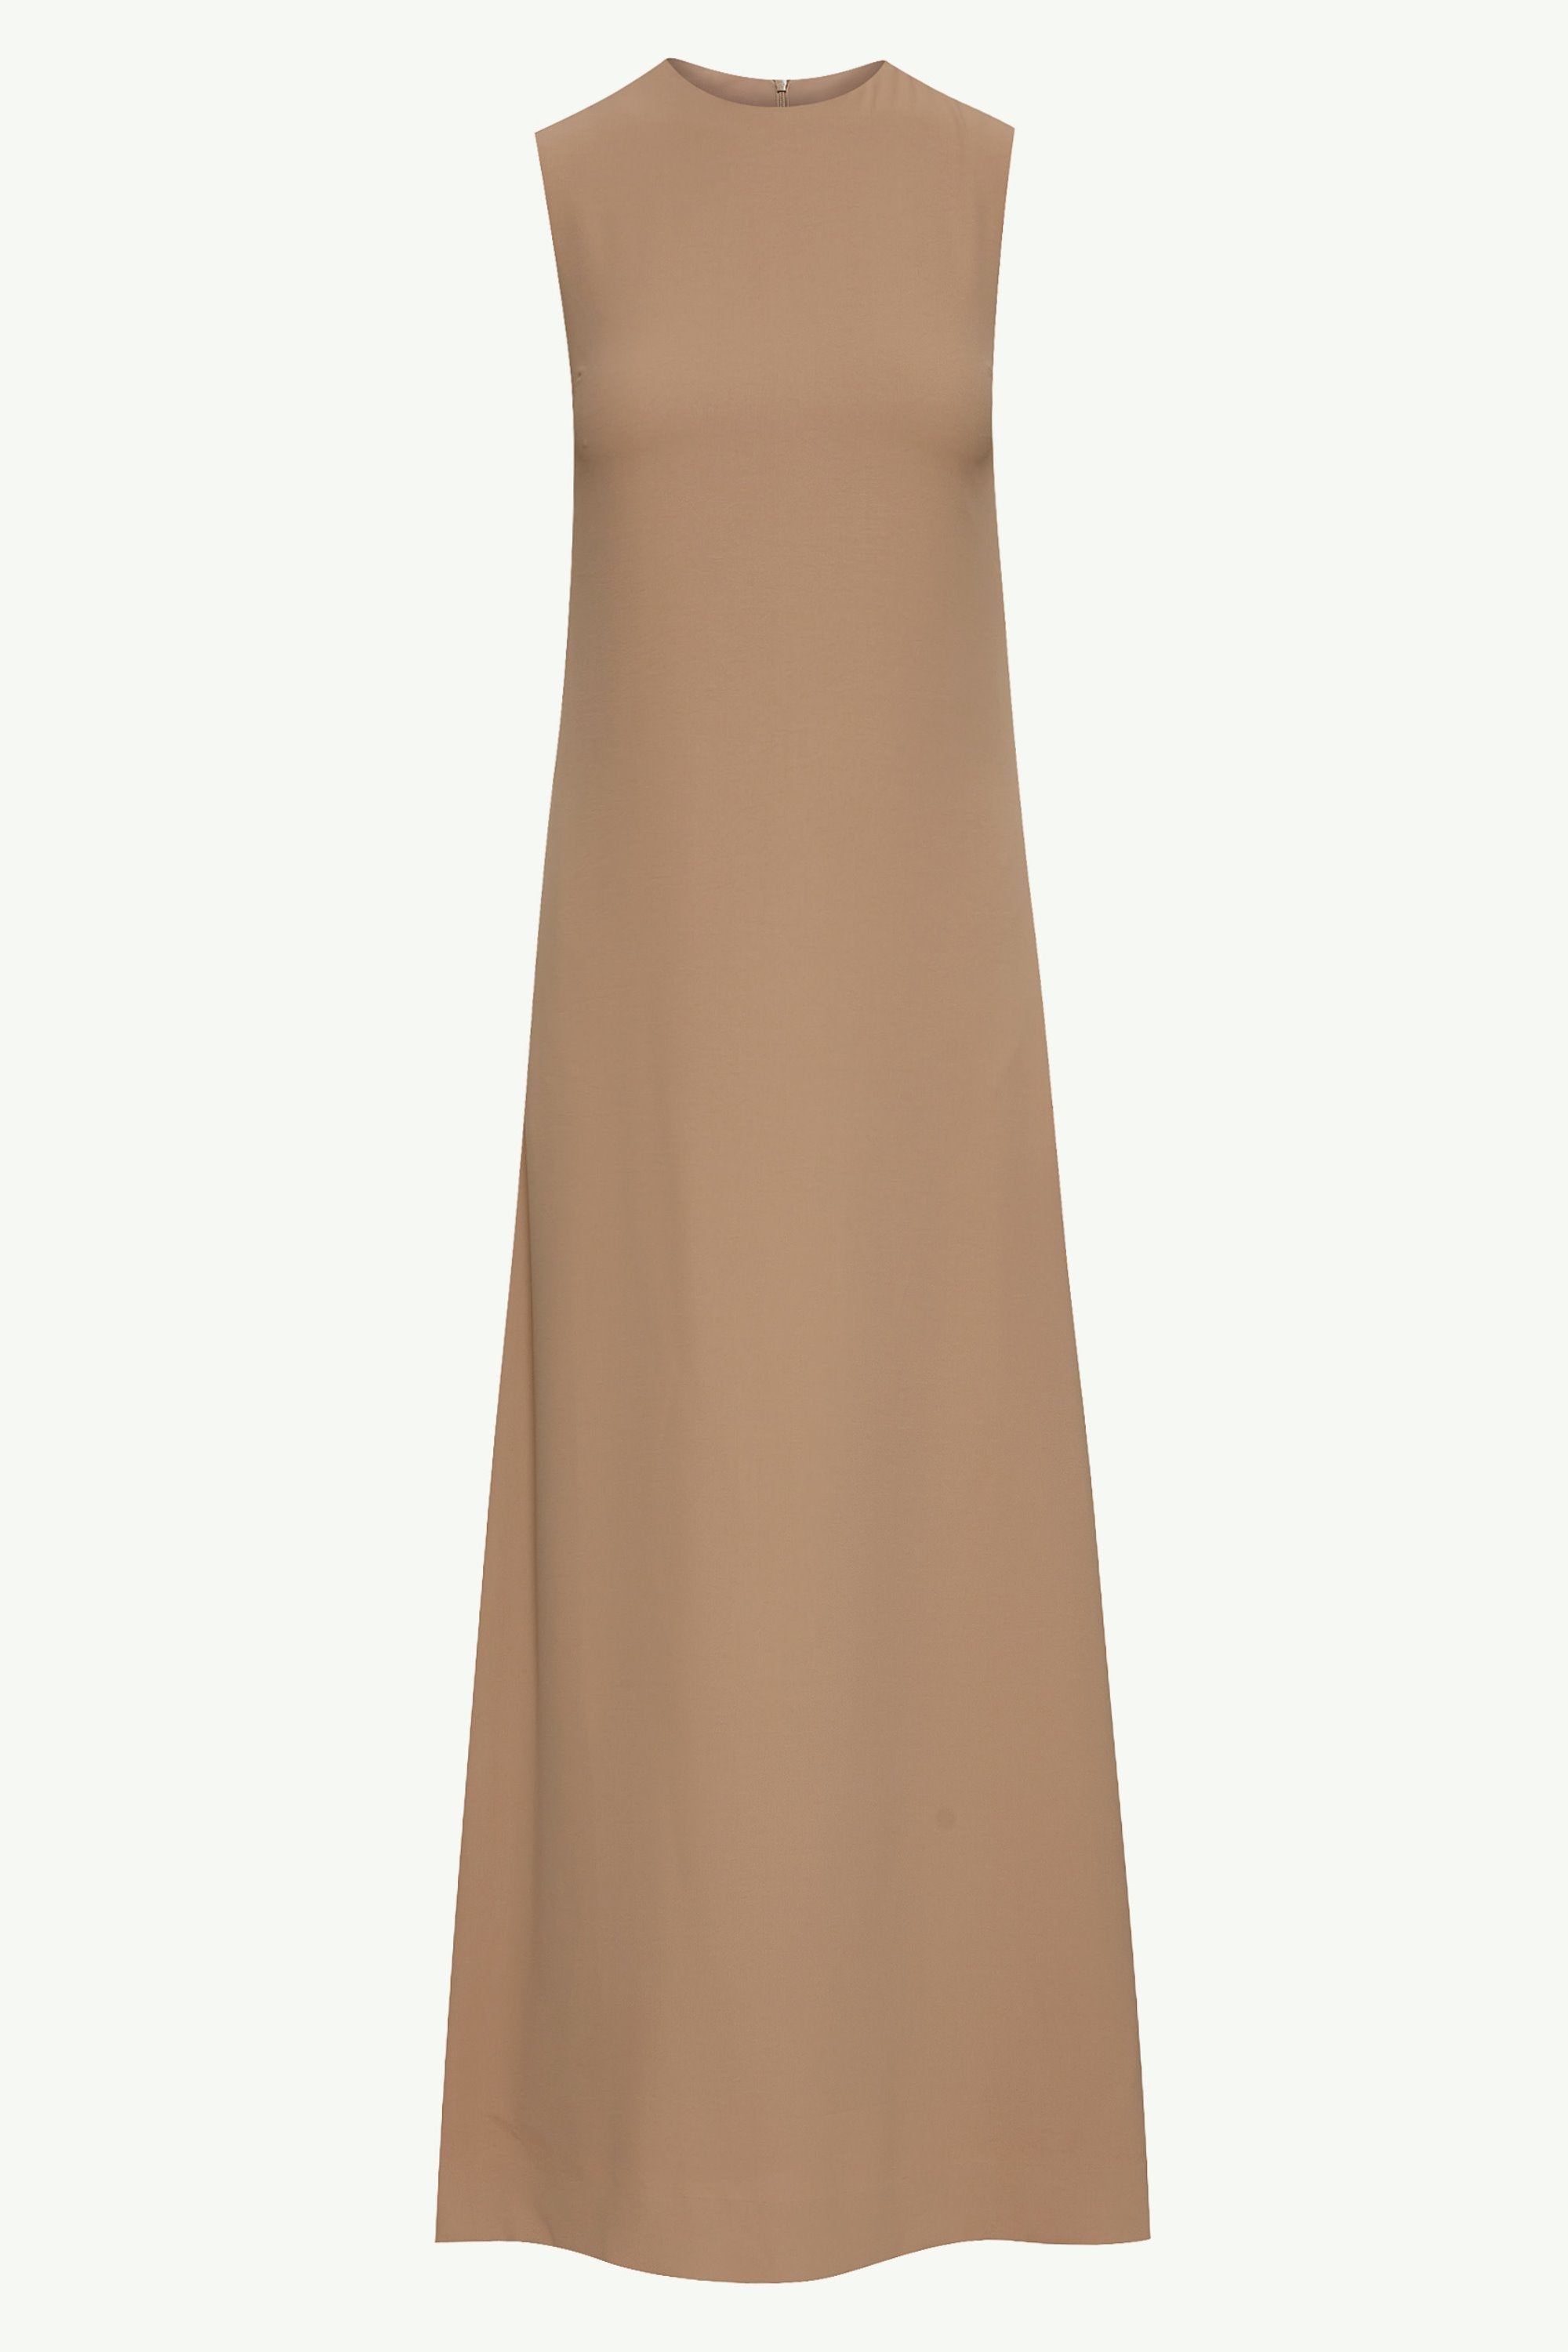 Essential Sleeveless Maxi Slip Dress - Caffe Clothing saigonodysseyhotel 